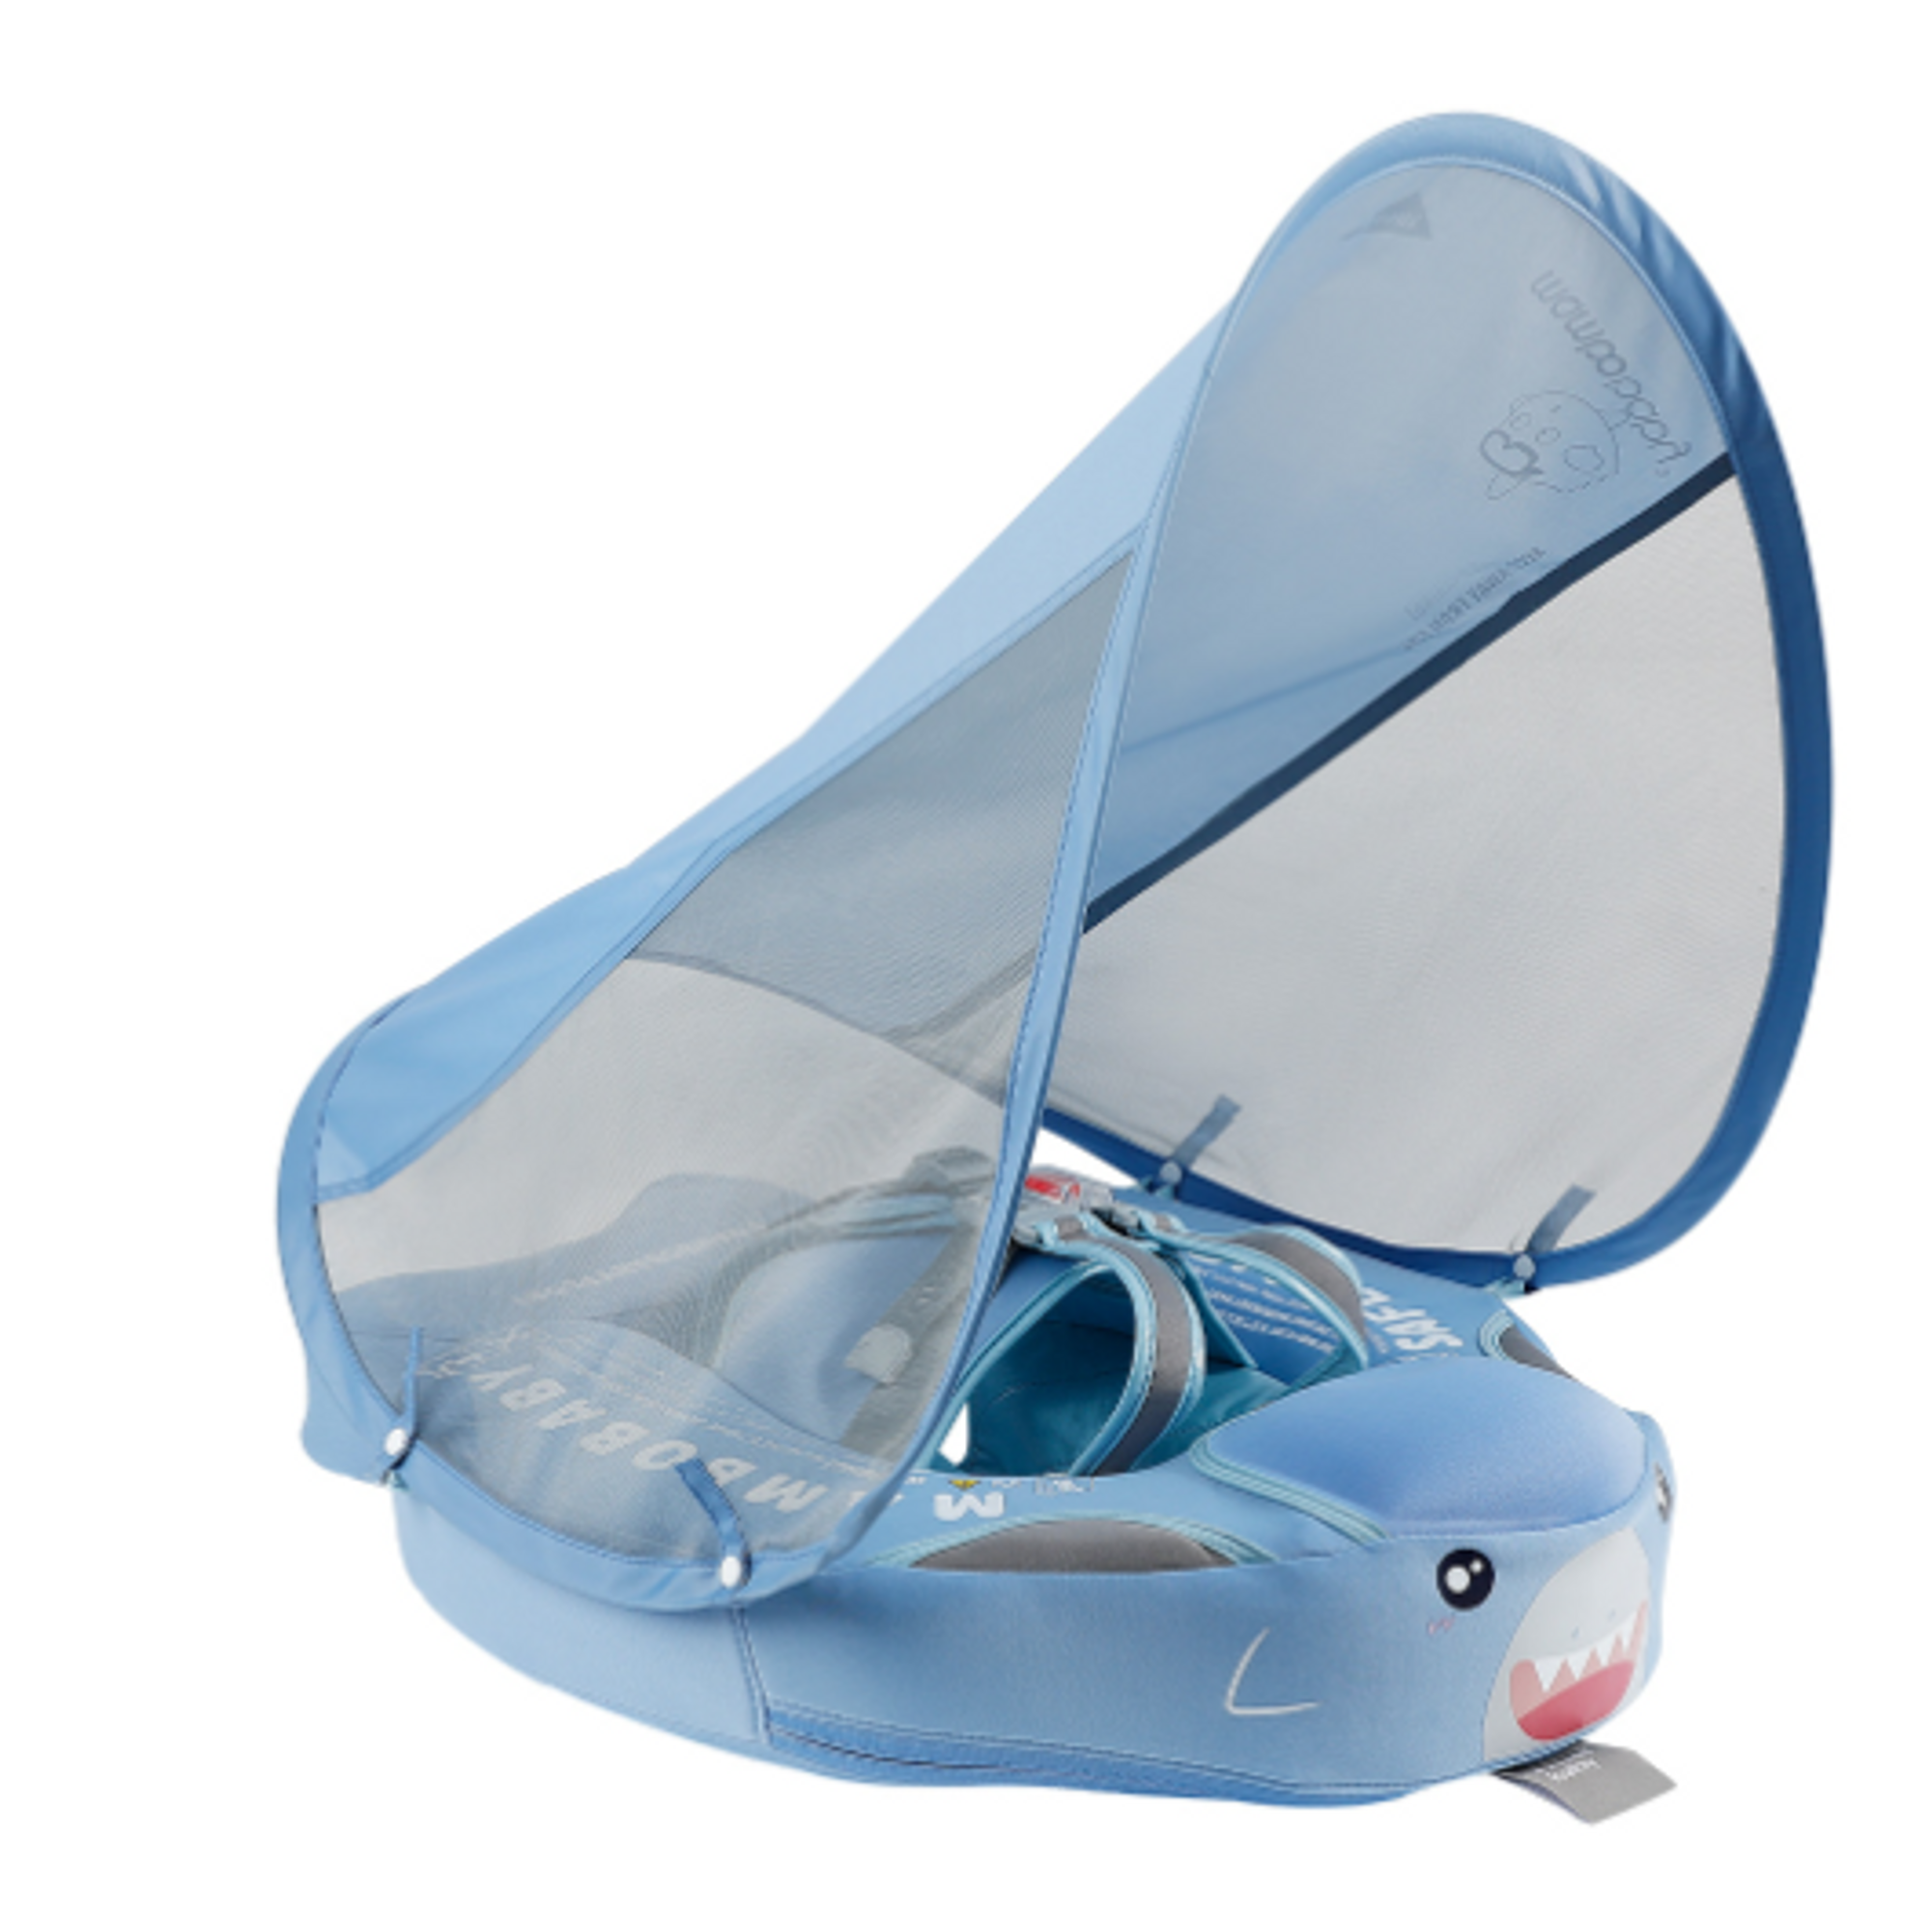 Flotador para bebé no inflable